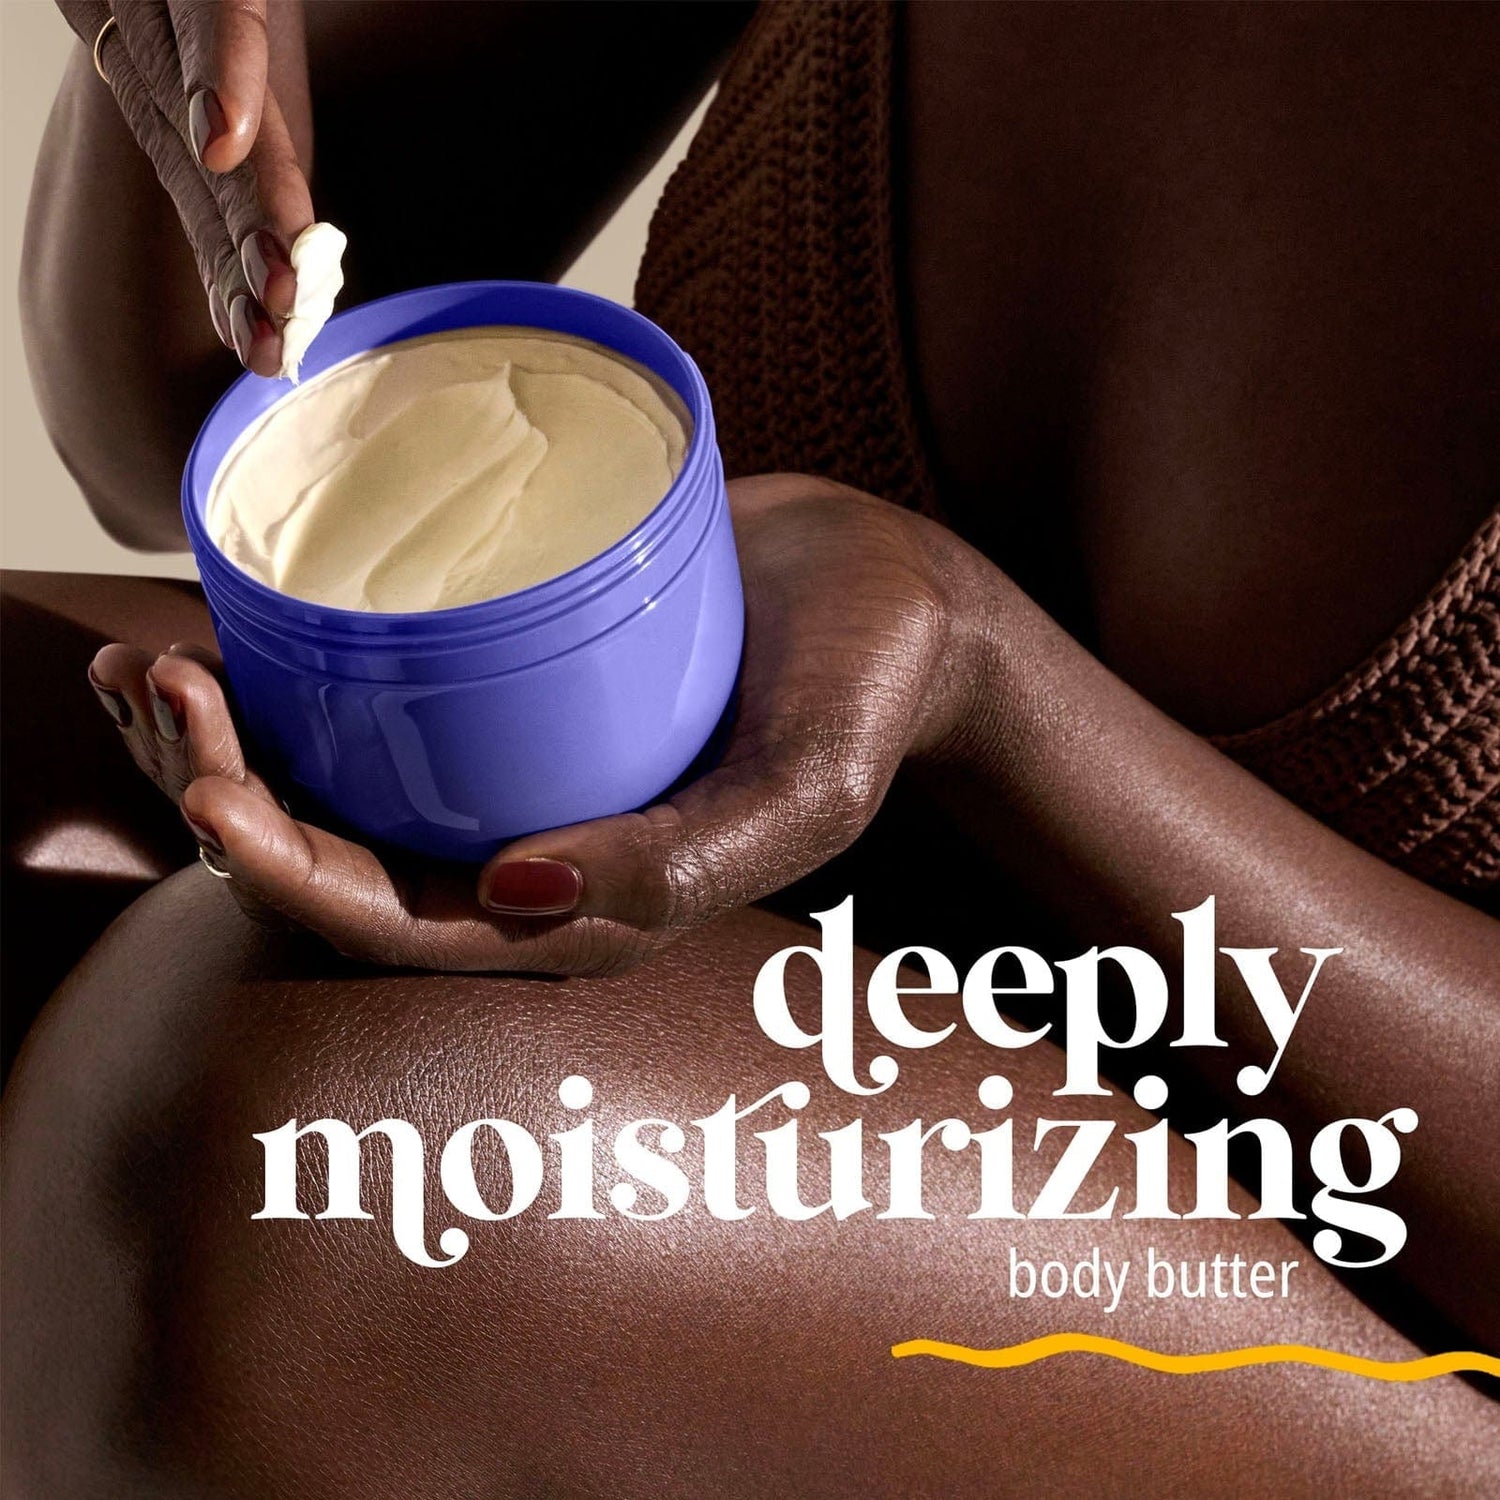 Deeply moisturizing body butter